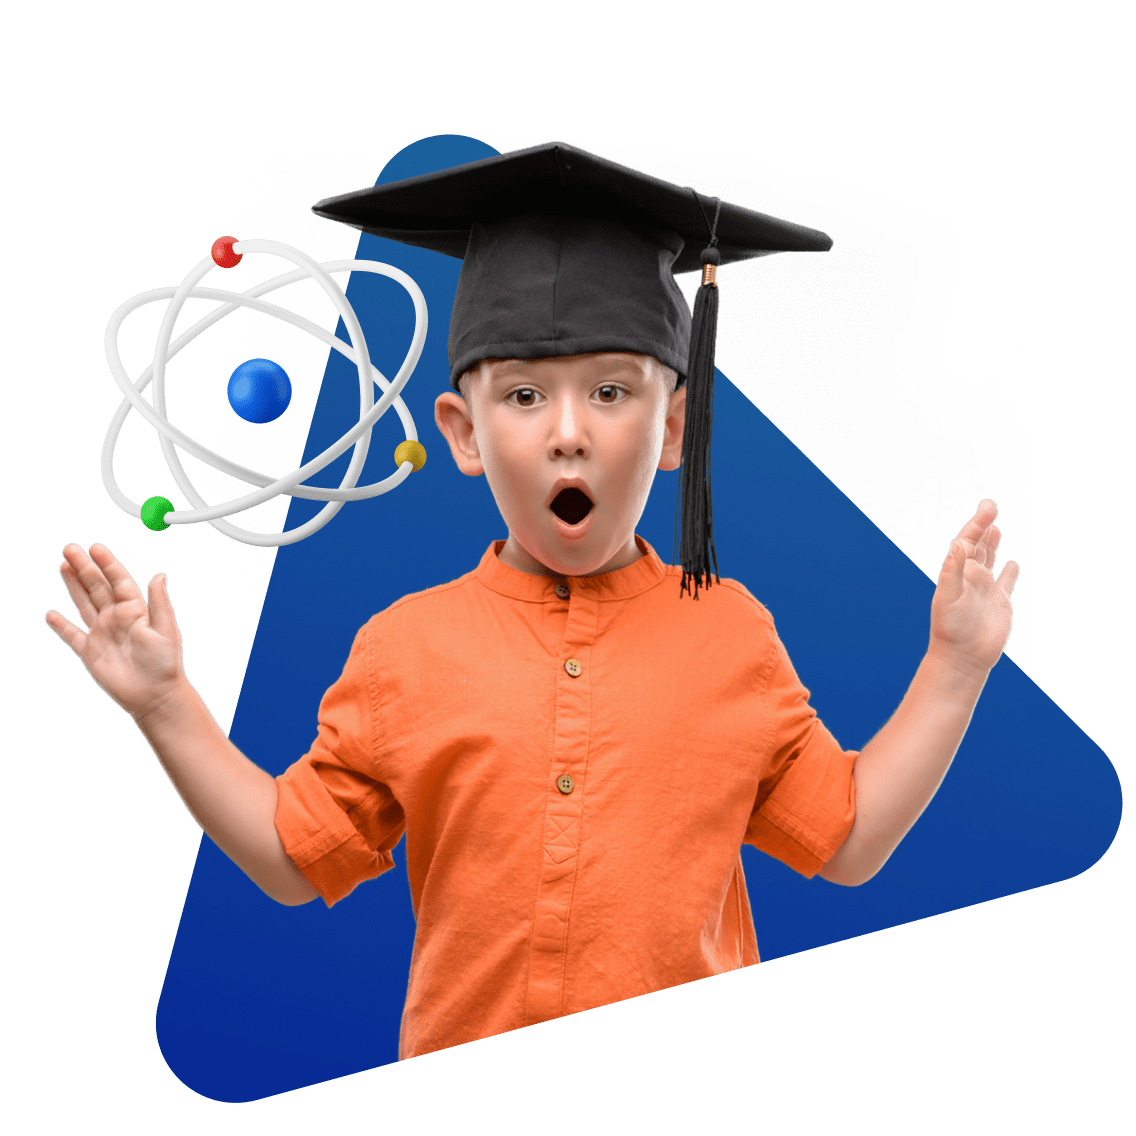 Ohio Online Schools imagen 5 (nombre 5 Young Boy Graduation Cap Science)